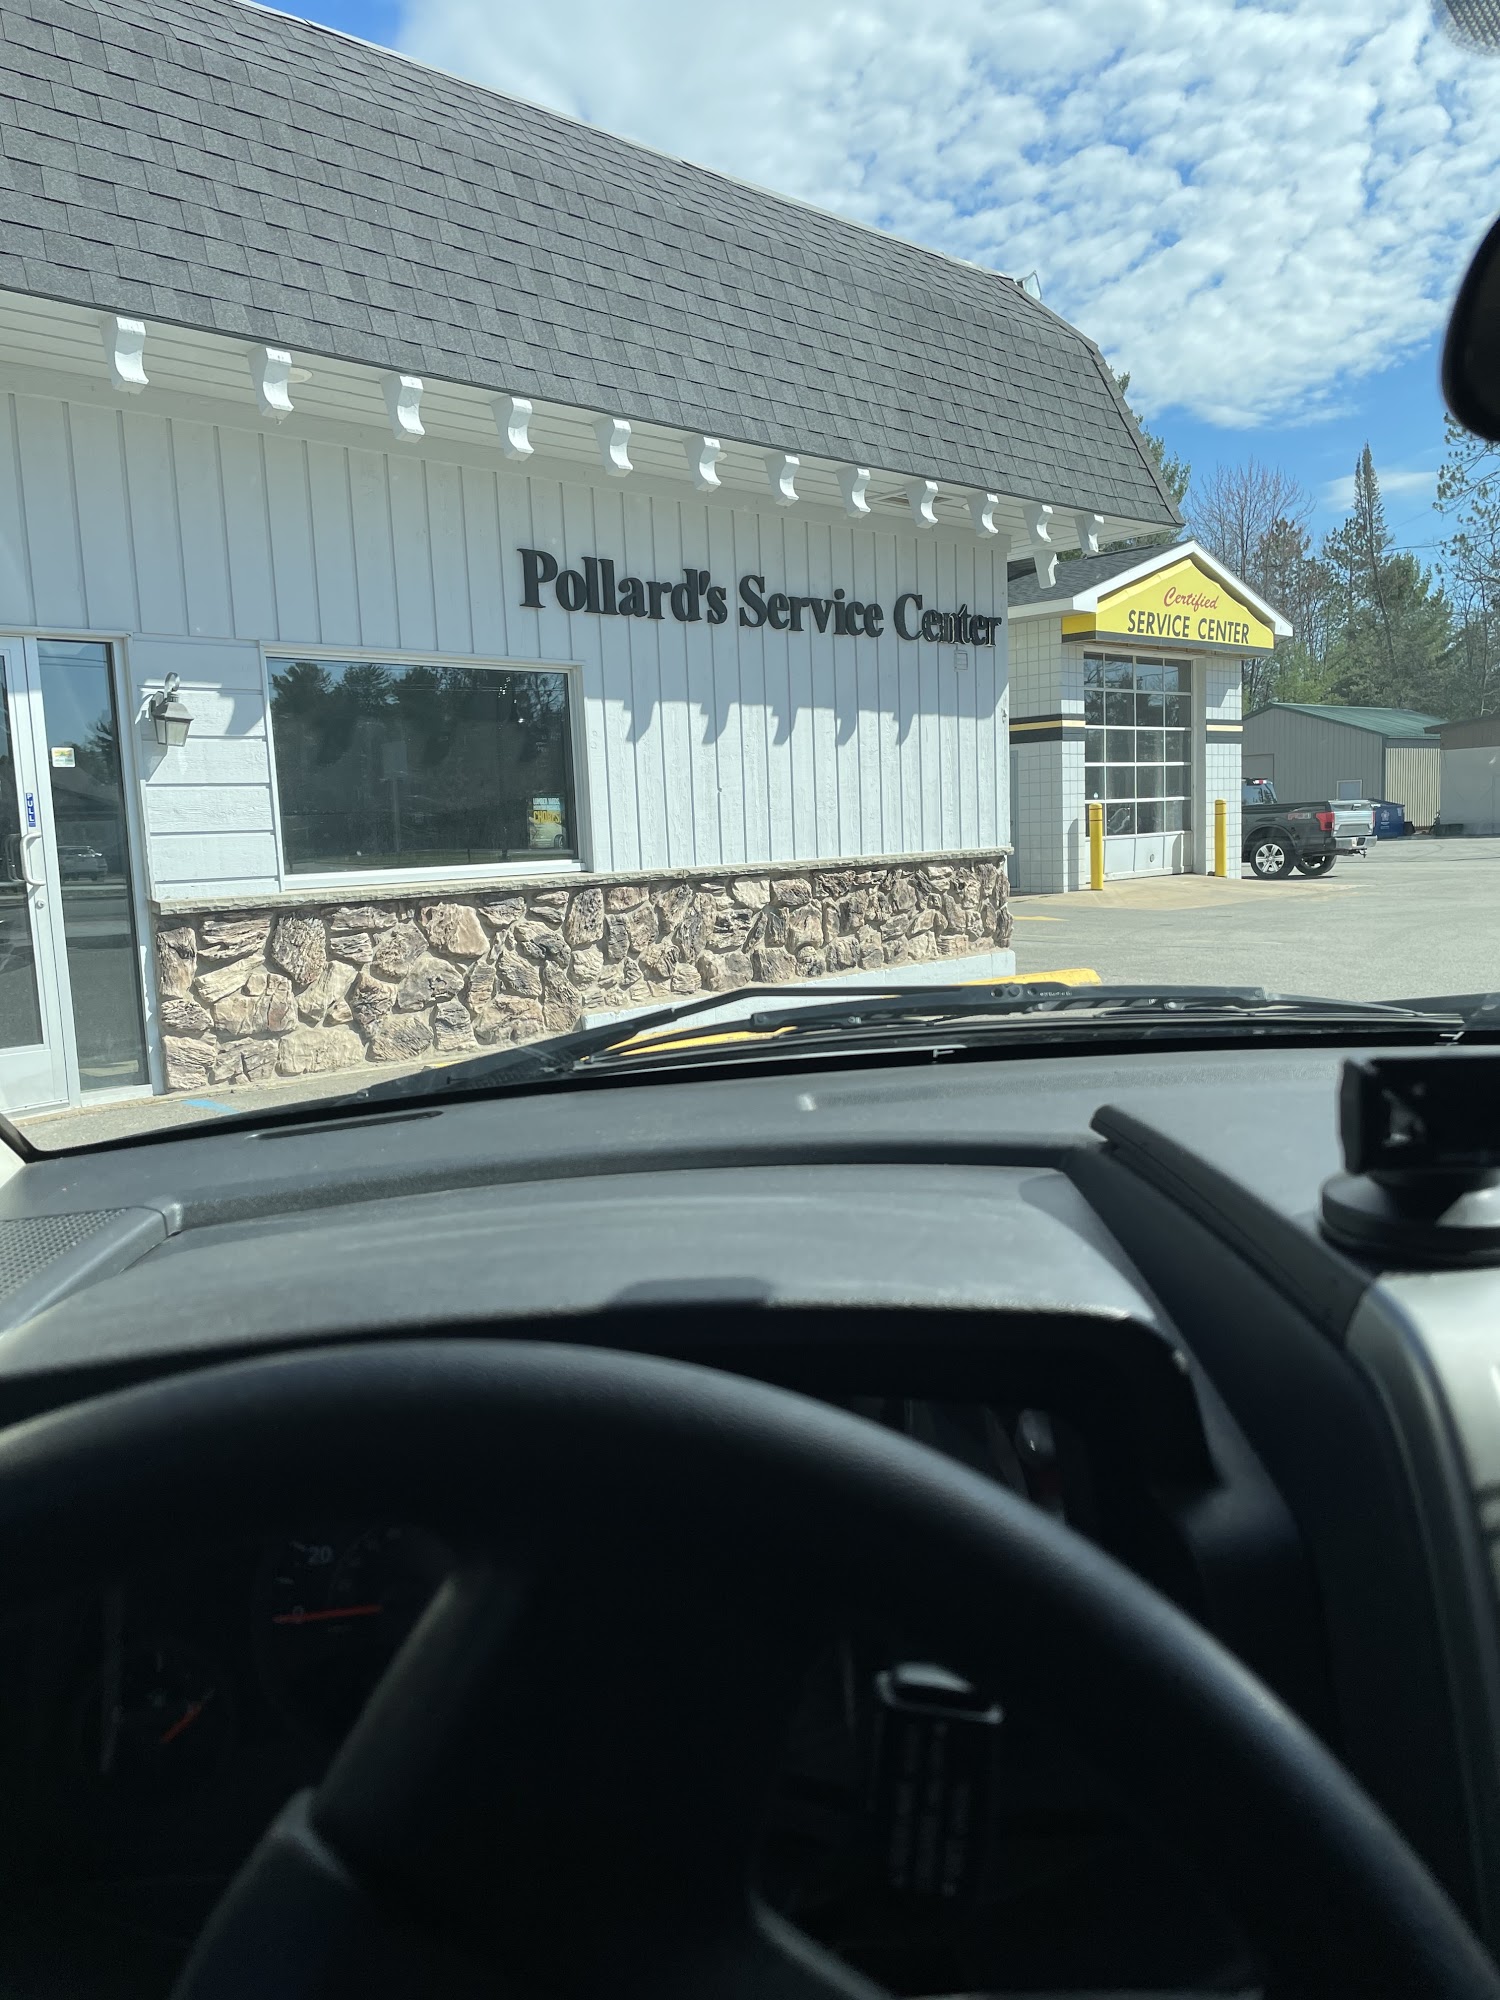 Pollard's Service Center and Quick Lube